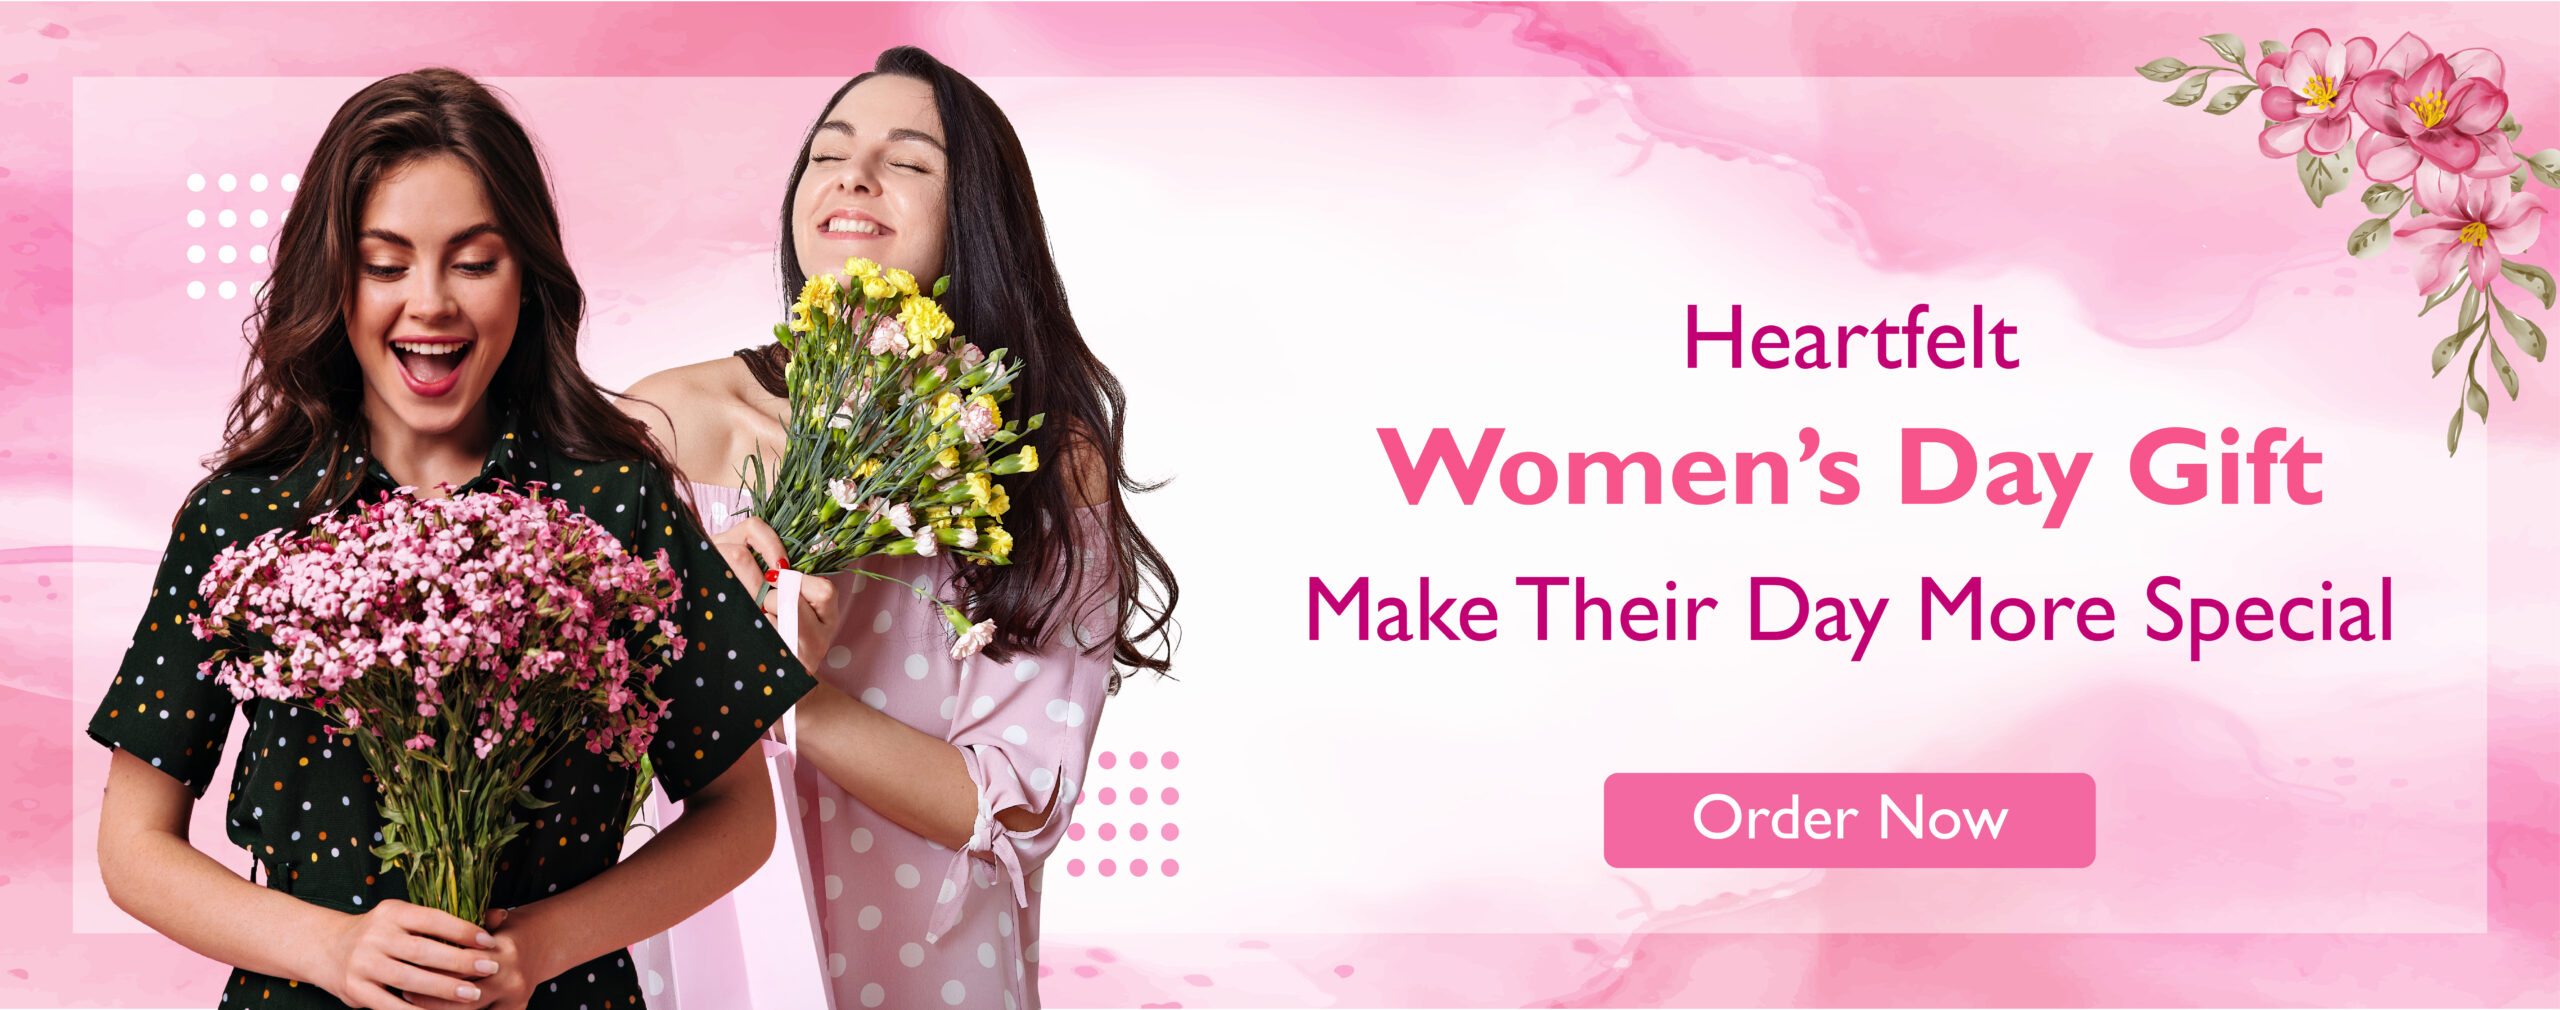 women's day gift online